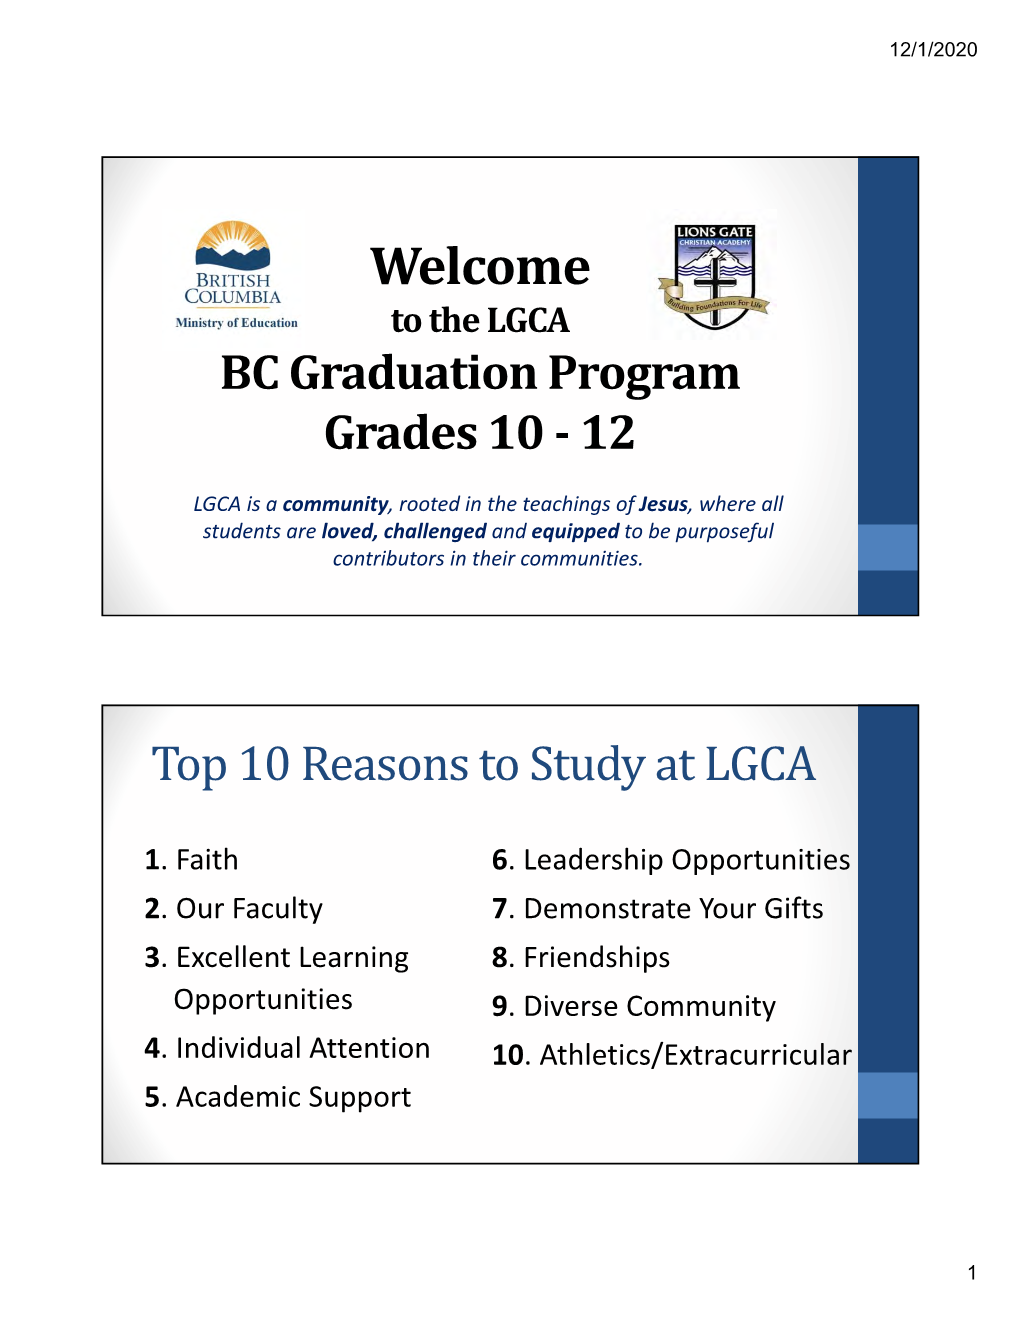 LGCA BC Grad Program